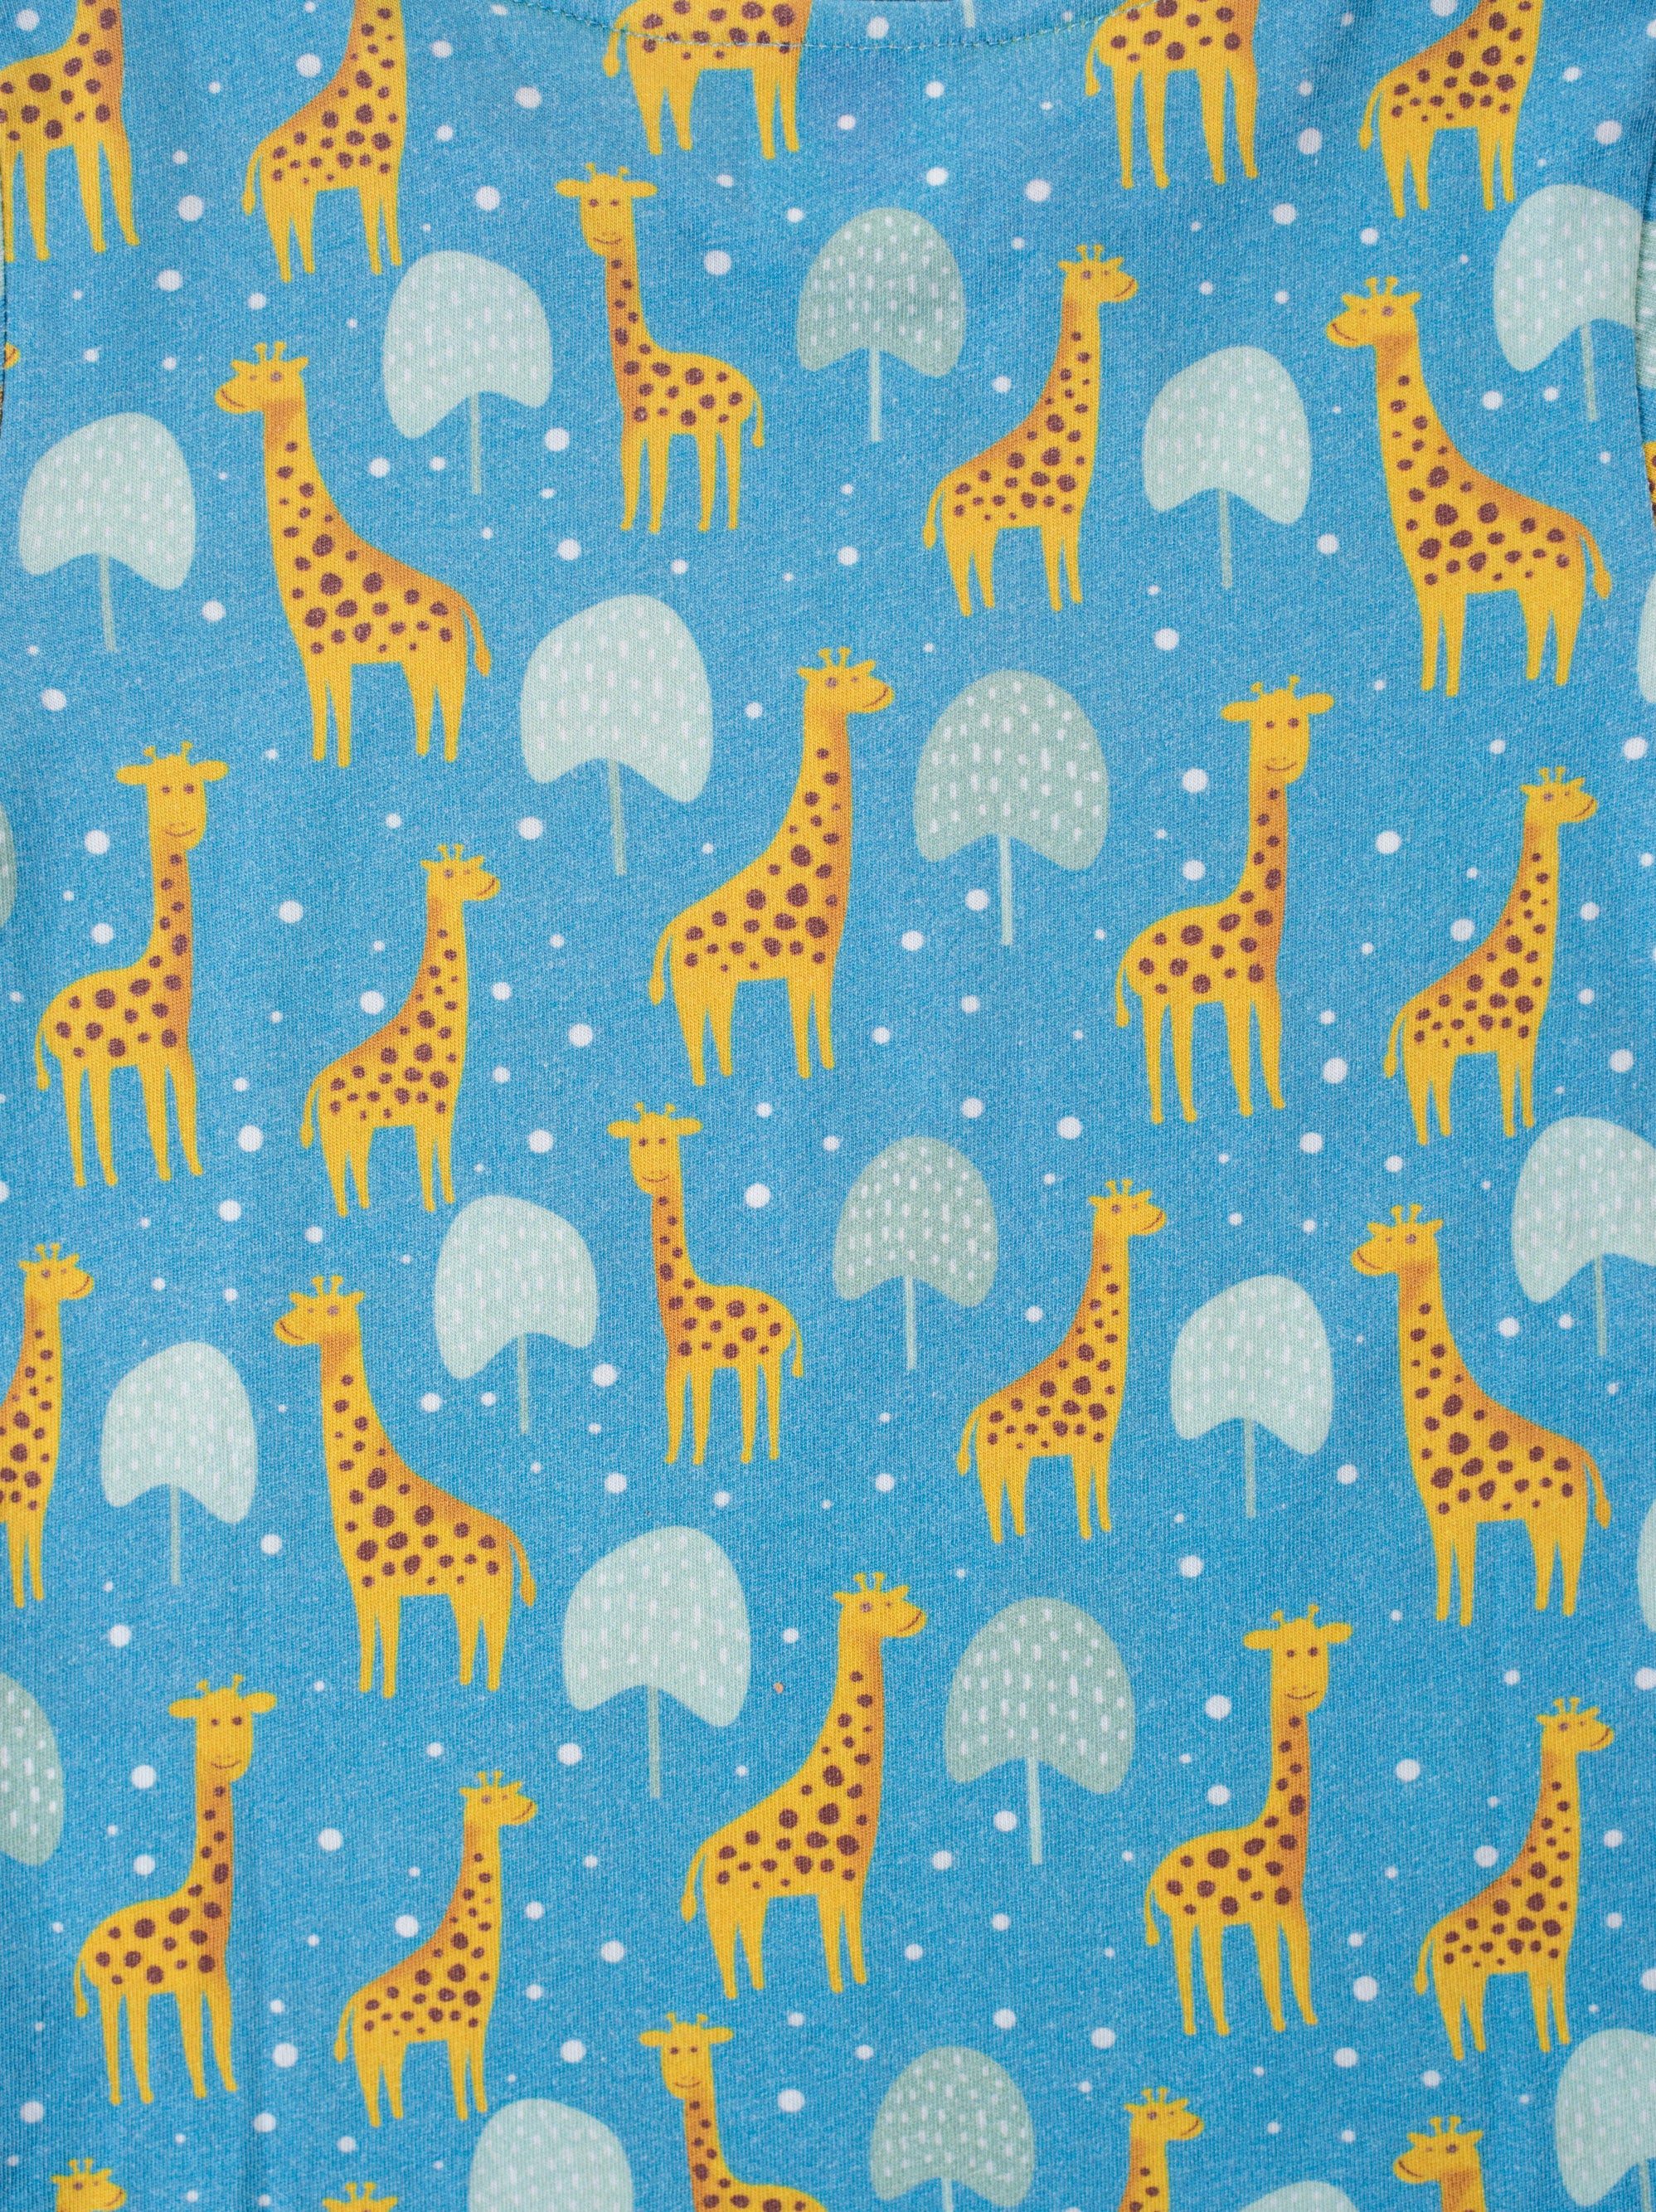 Giraffe- Animal Planet